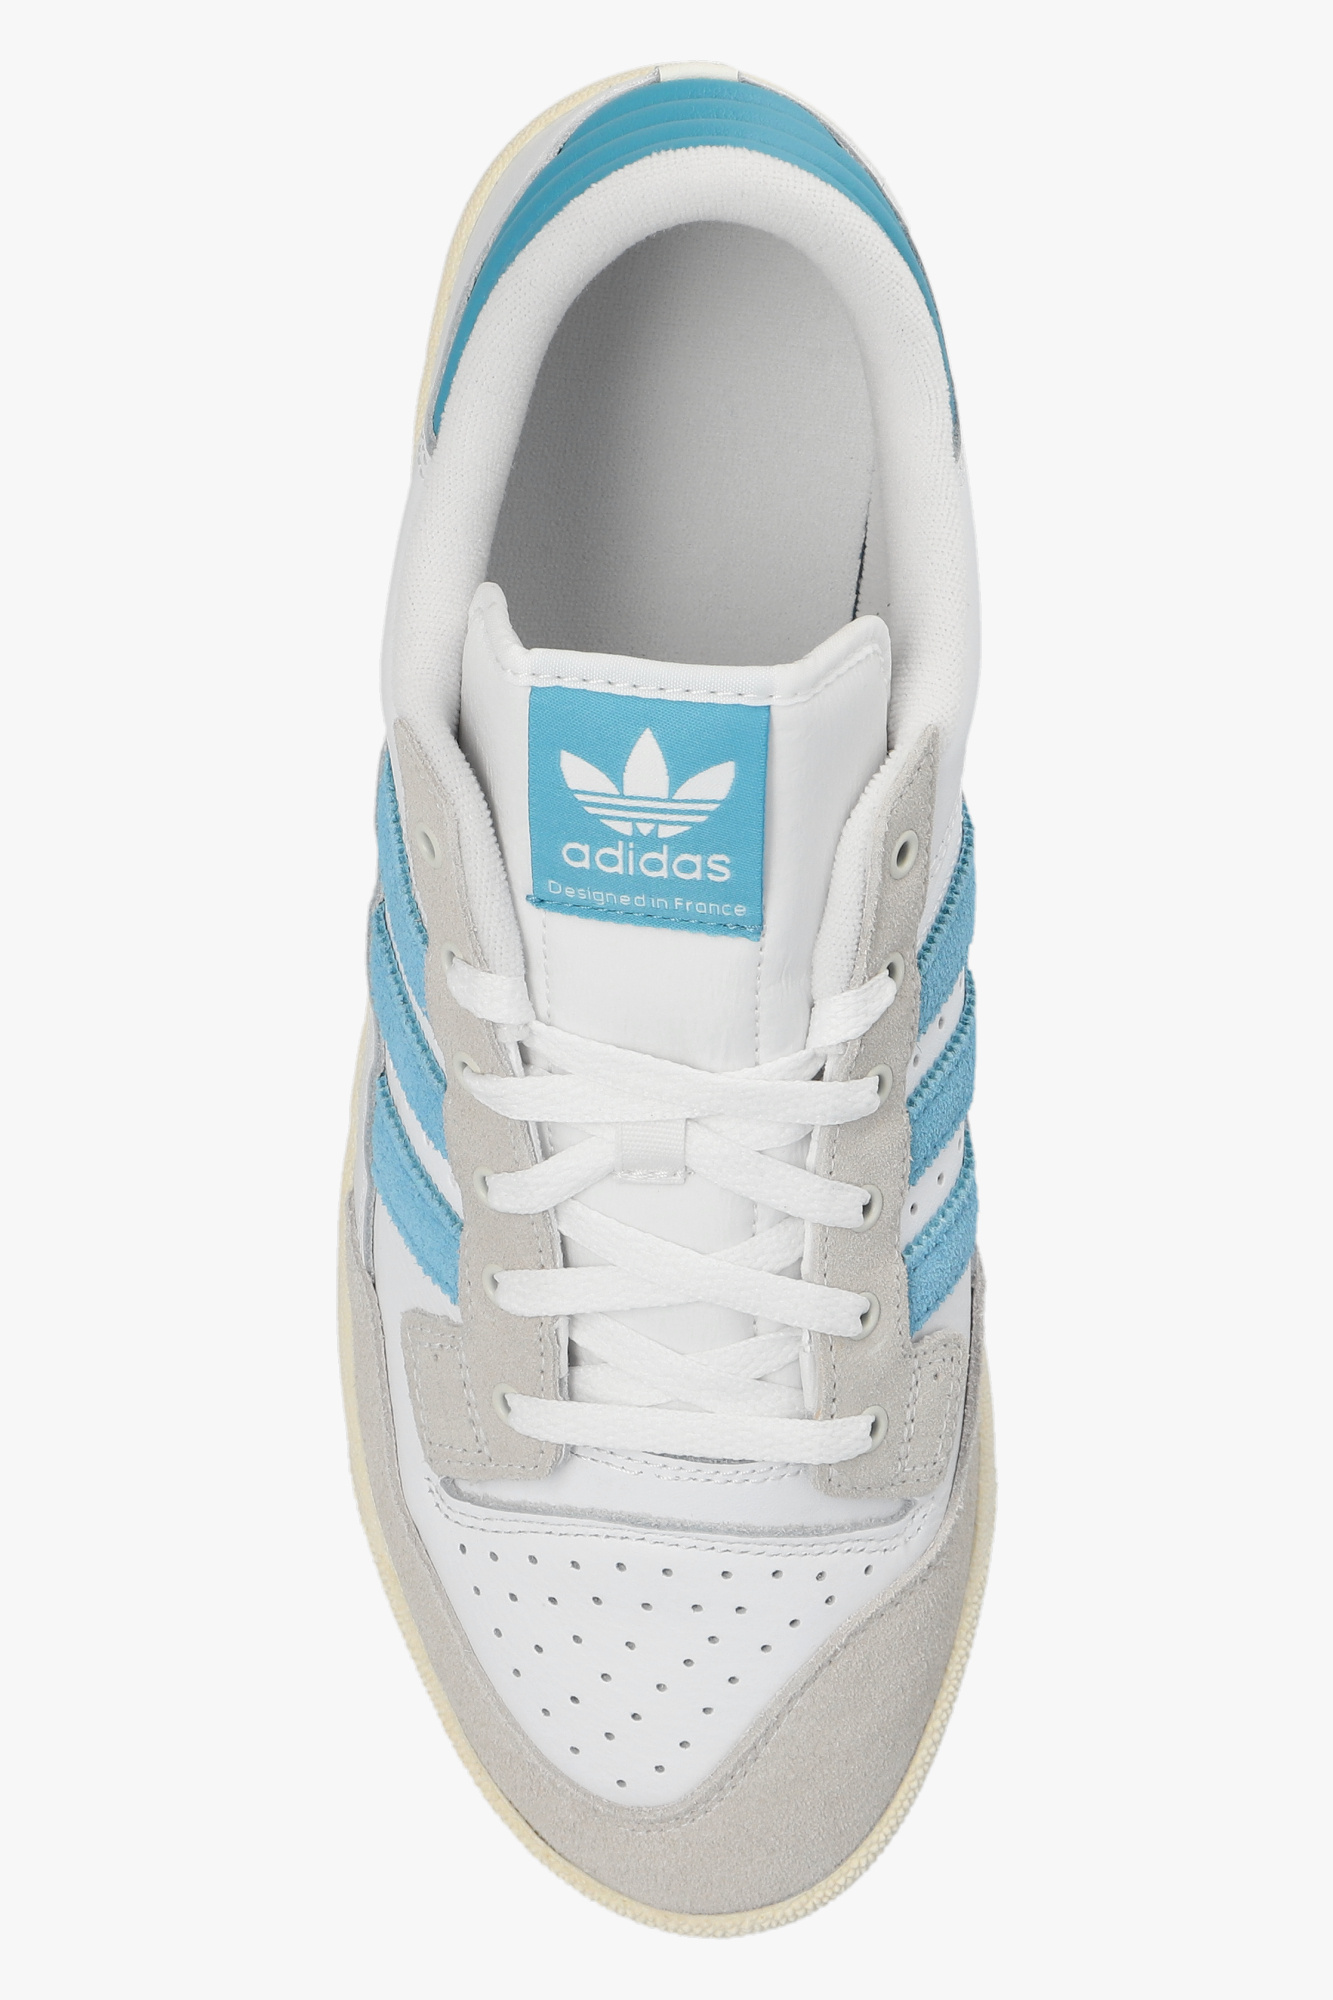 Adidas Centennial 85 Low Footwear White / Light Blue / Cream White - ID4228